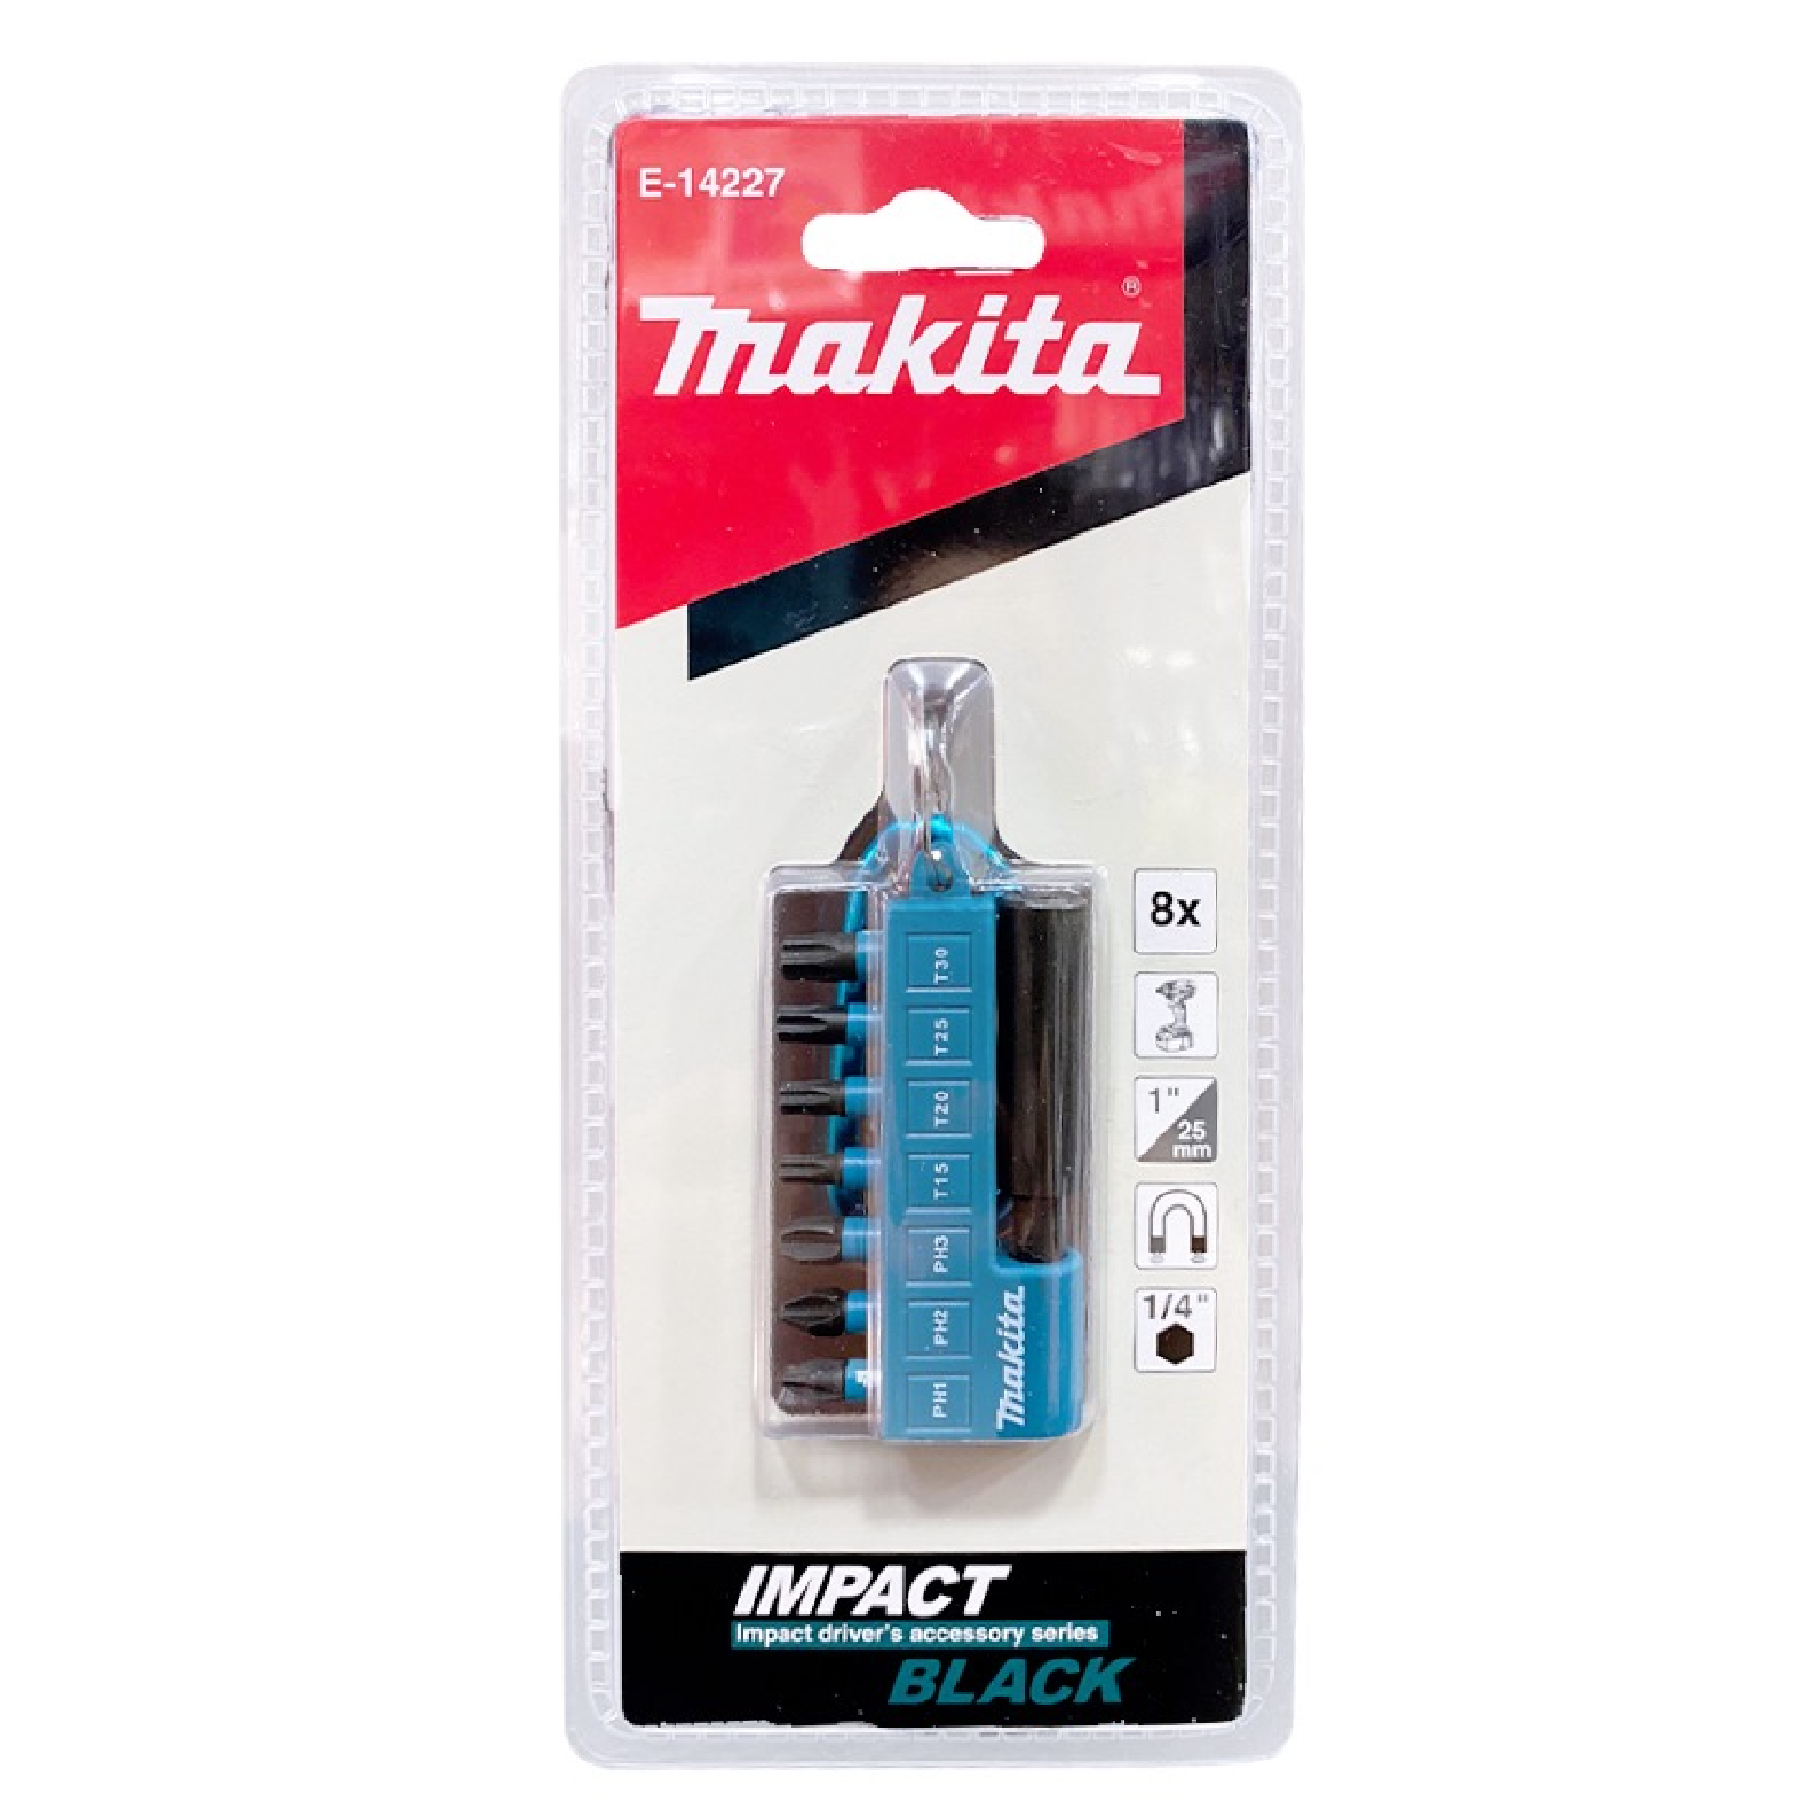 Makita E-14227 IMPACT DRIVER 1/4 HEX SCREW BITS & Extension Key Chain Set 8PC/Set